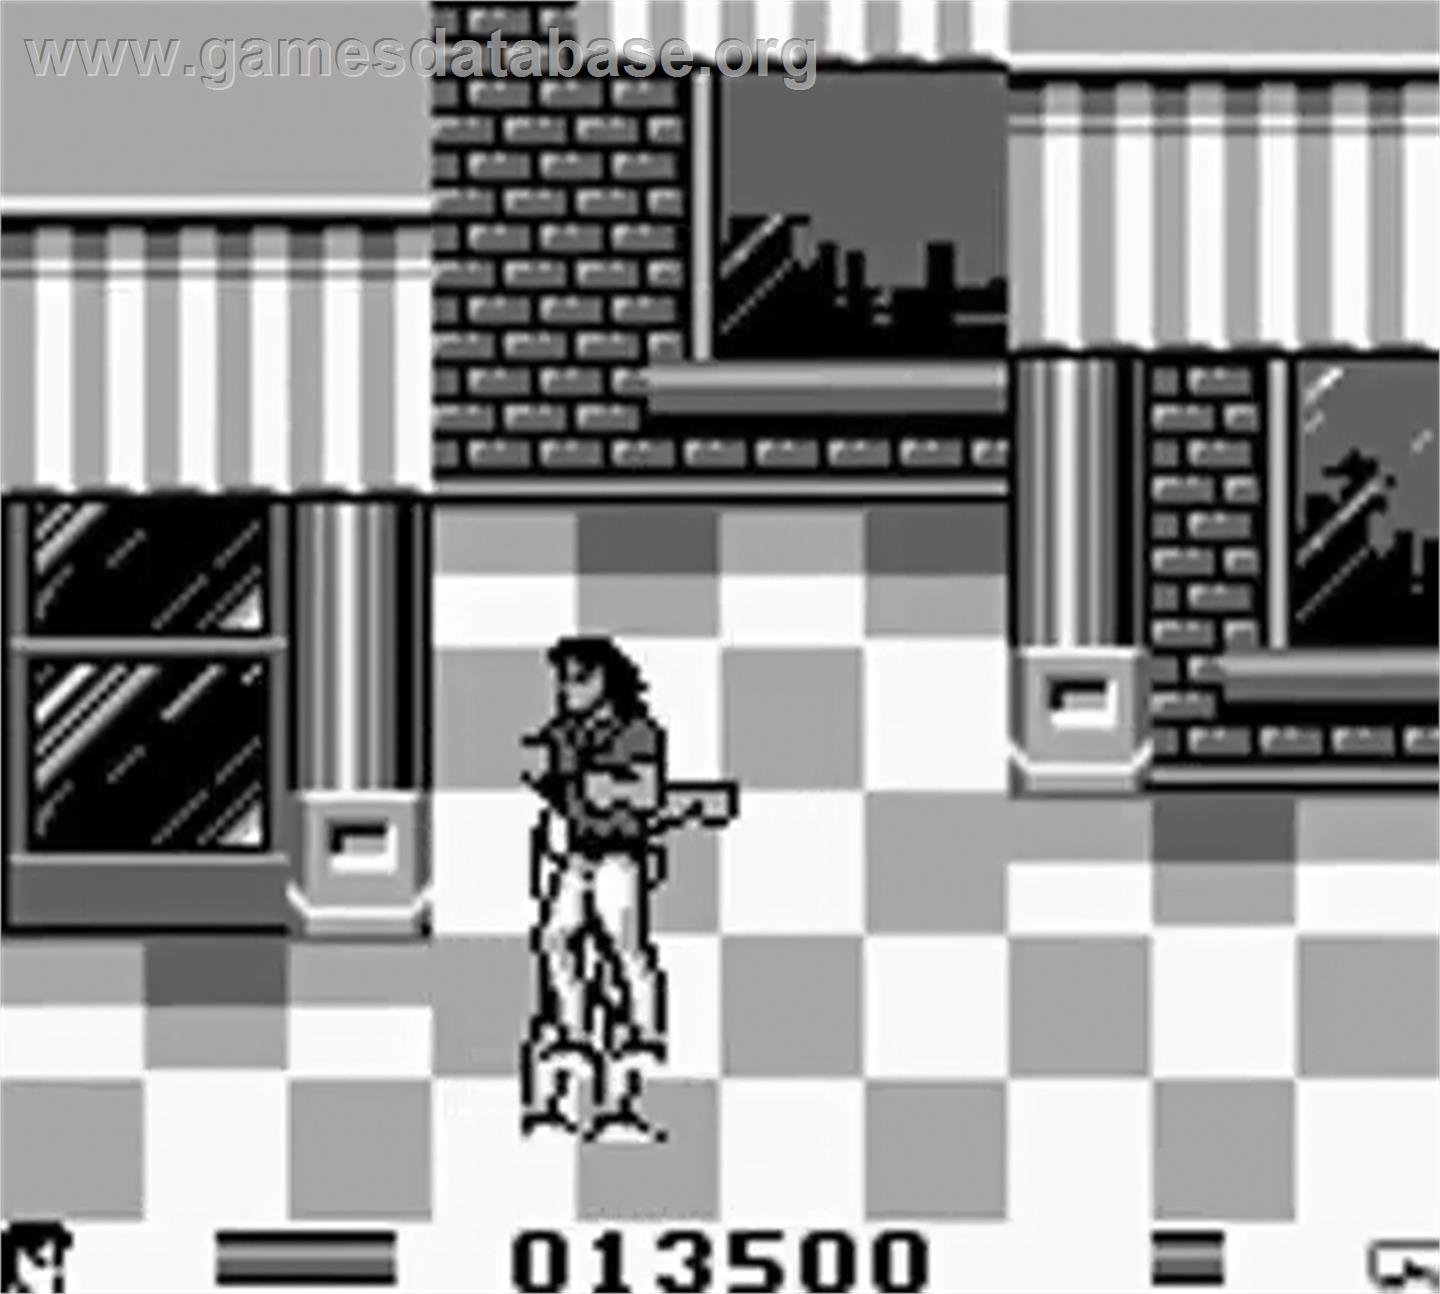 Lethal Weapon - Nintendo Game Boy - Artwork - In Game